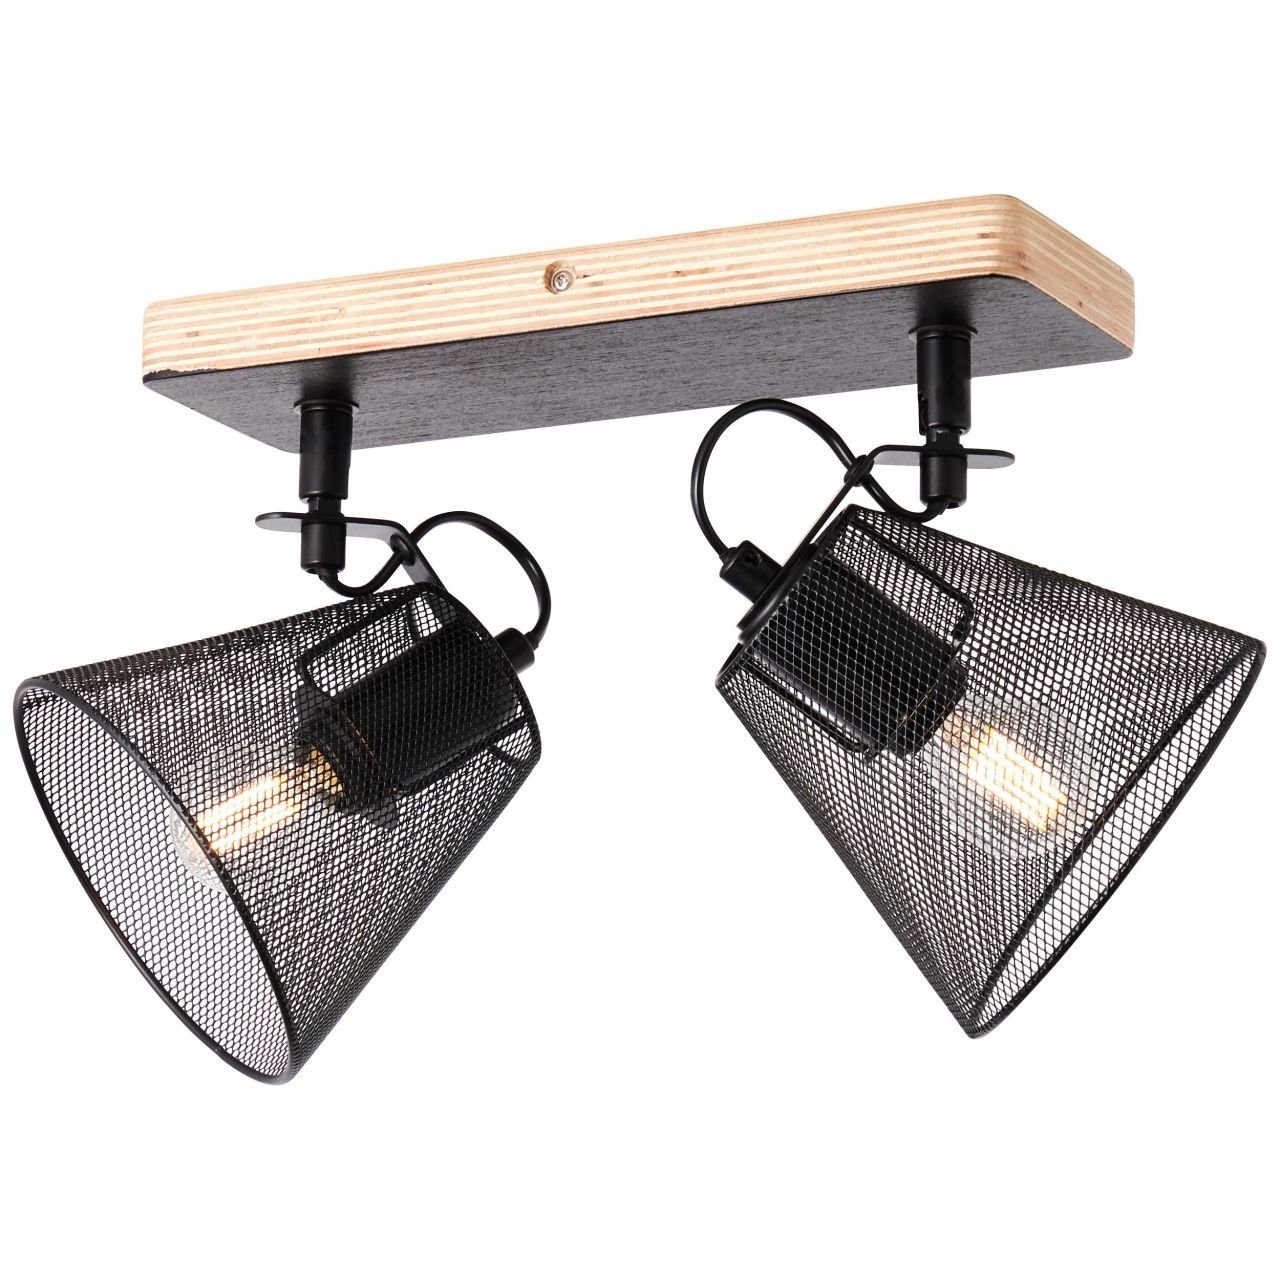 Brilliant Spotbalken 2flg Lampe, 2x Deckenleuchte Metall/Holz, Whole Whole, D45 schwarz/holzfarbend,